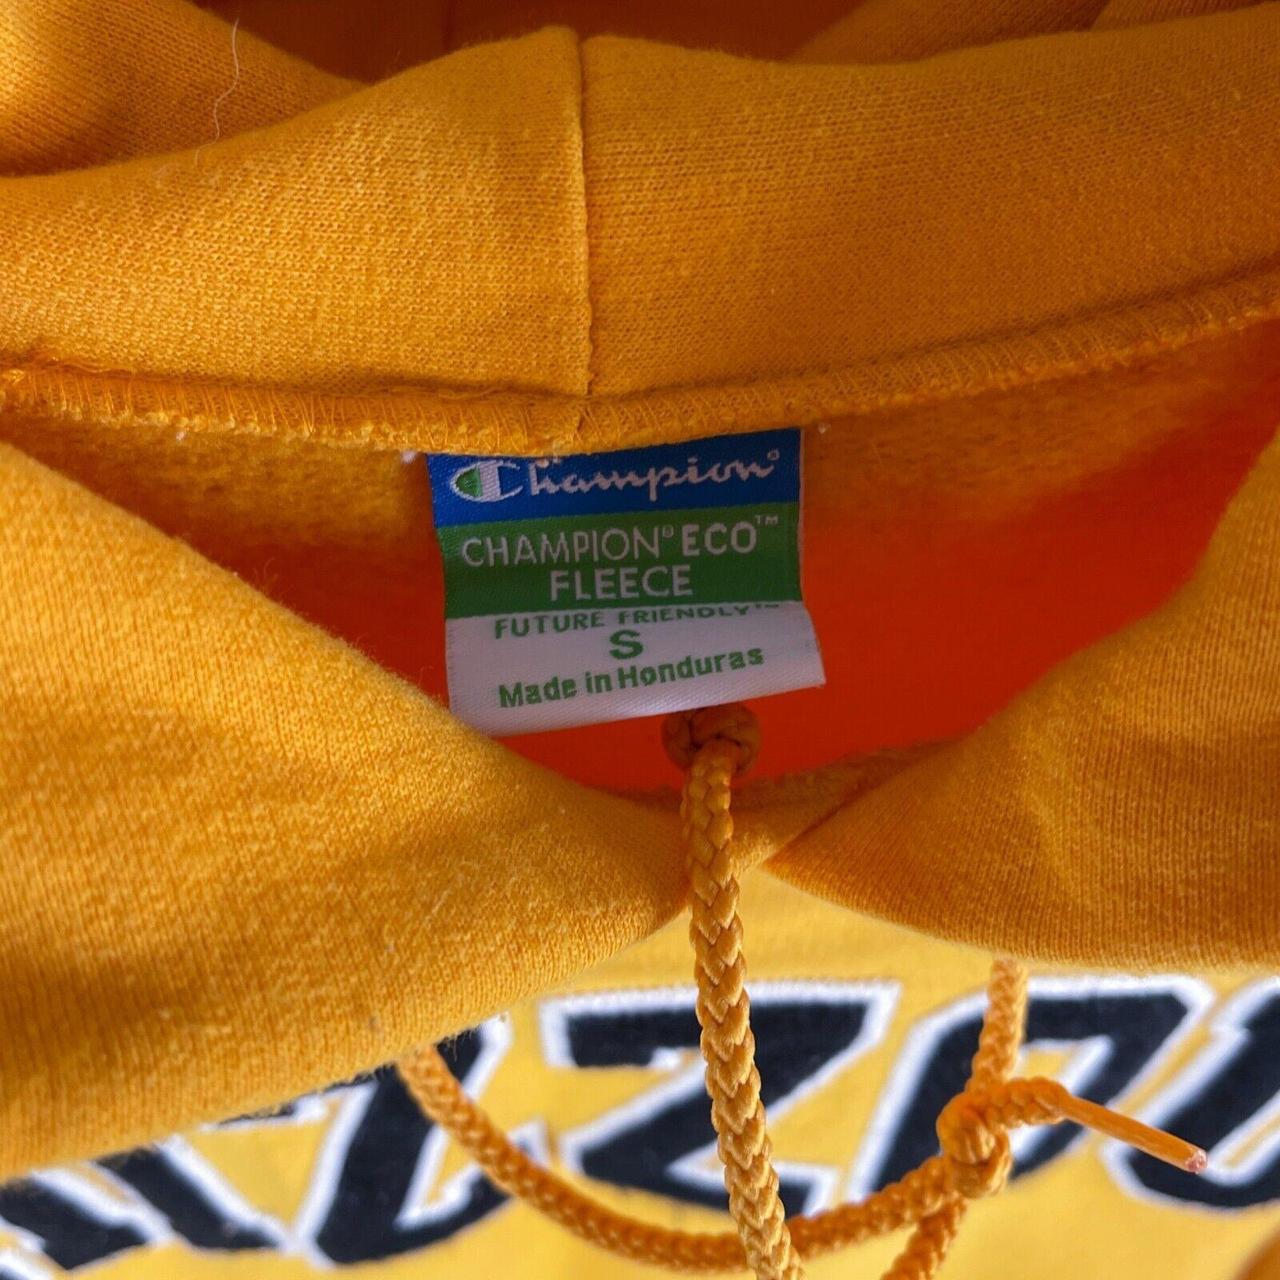 Vintage Champion Hoodie Yellow Mizzou University... - Depop